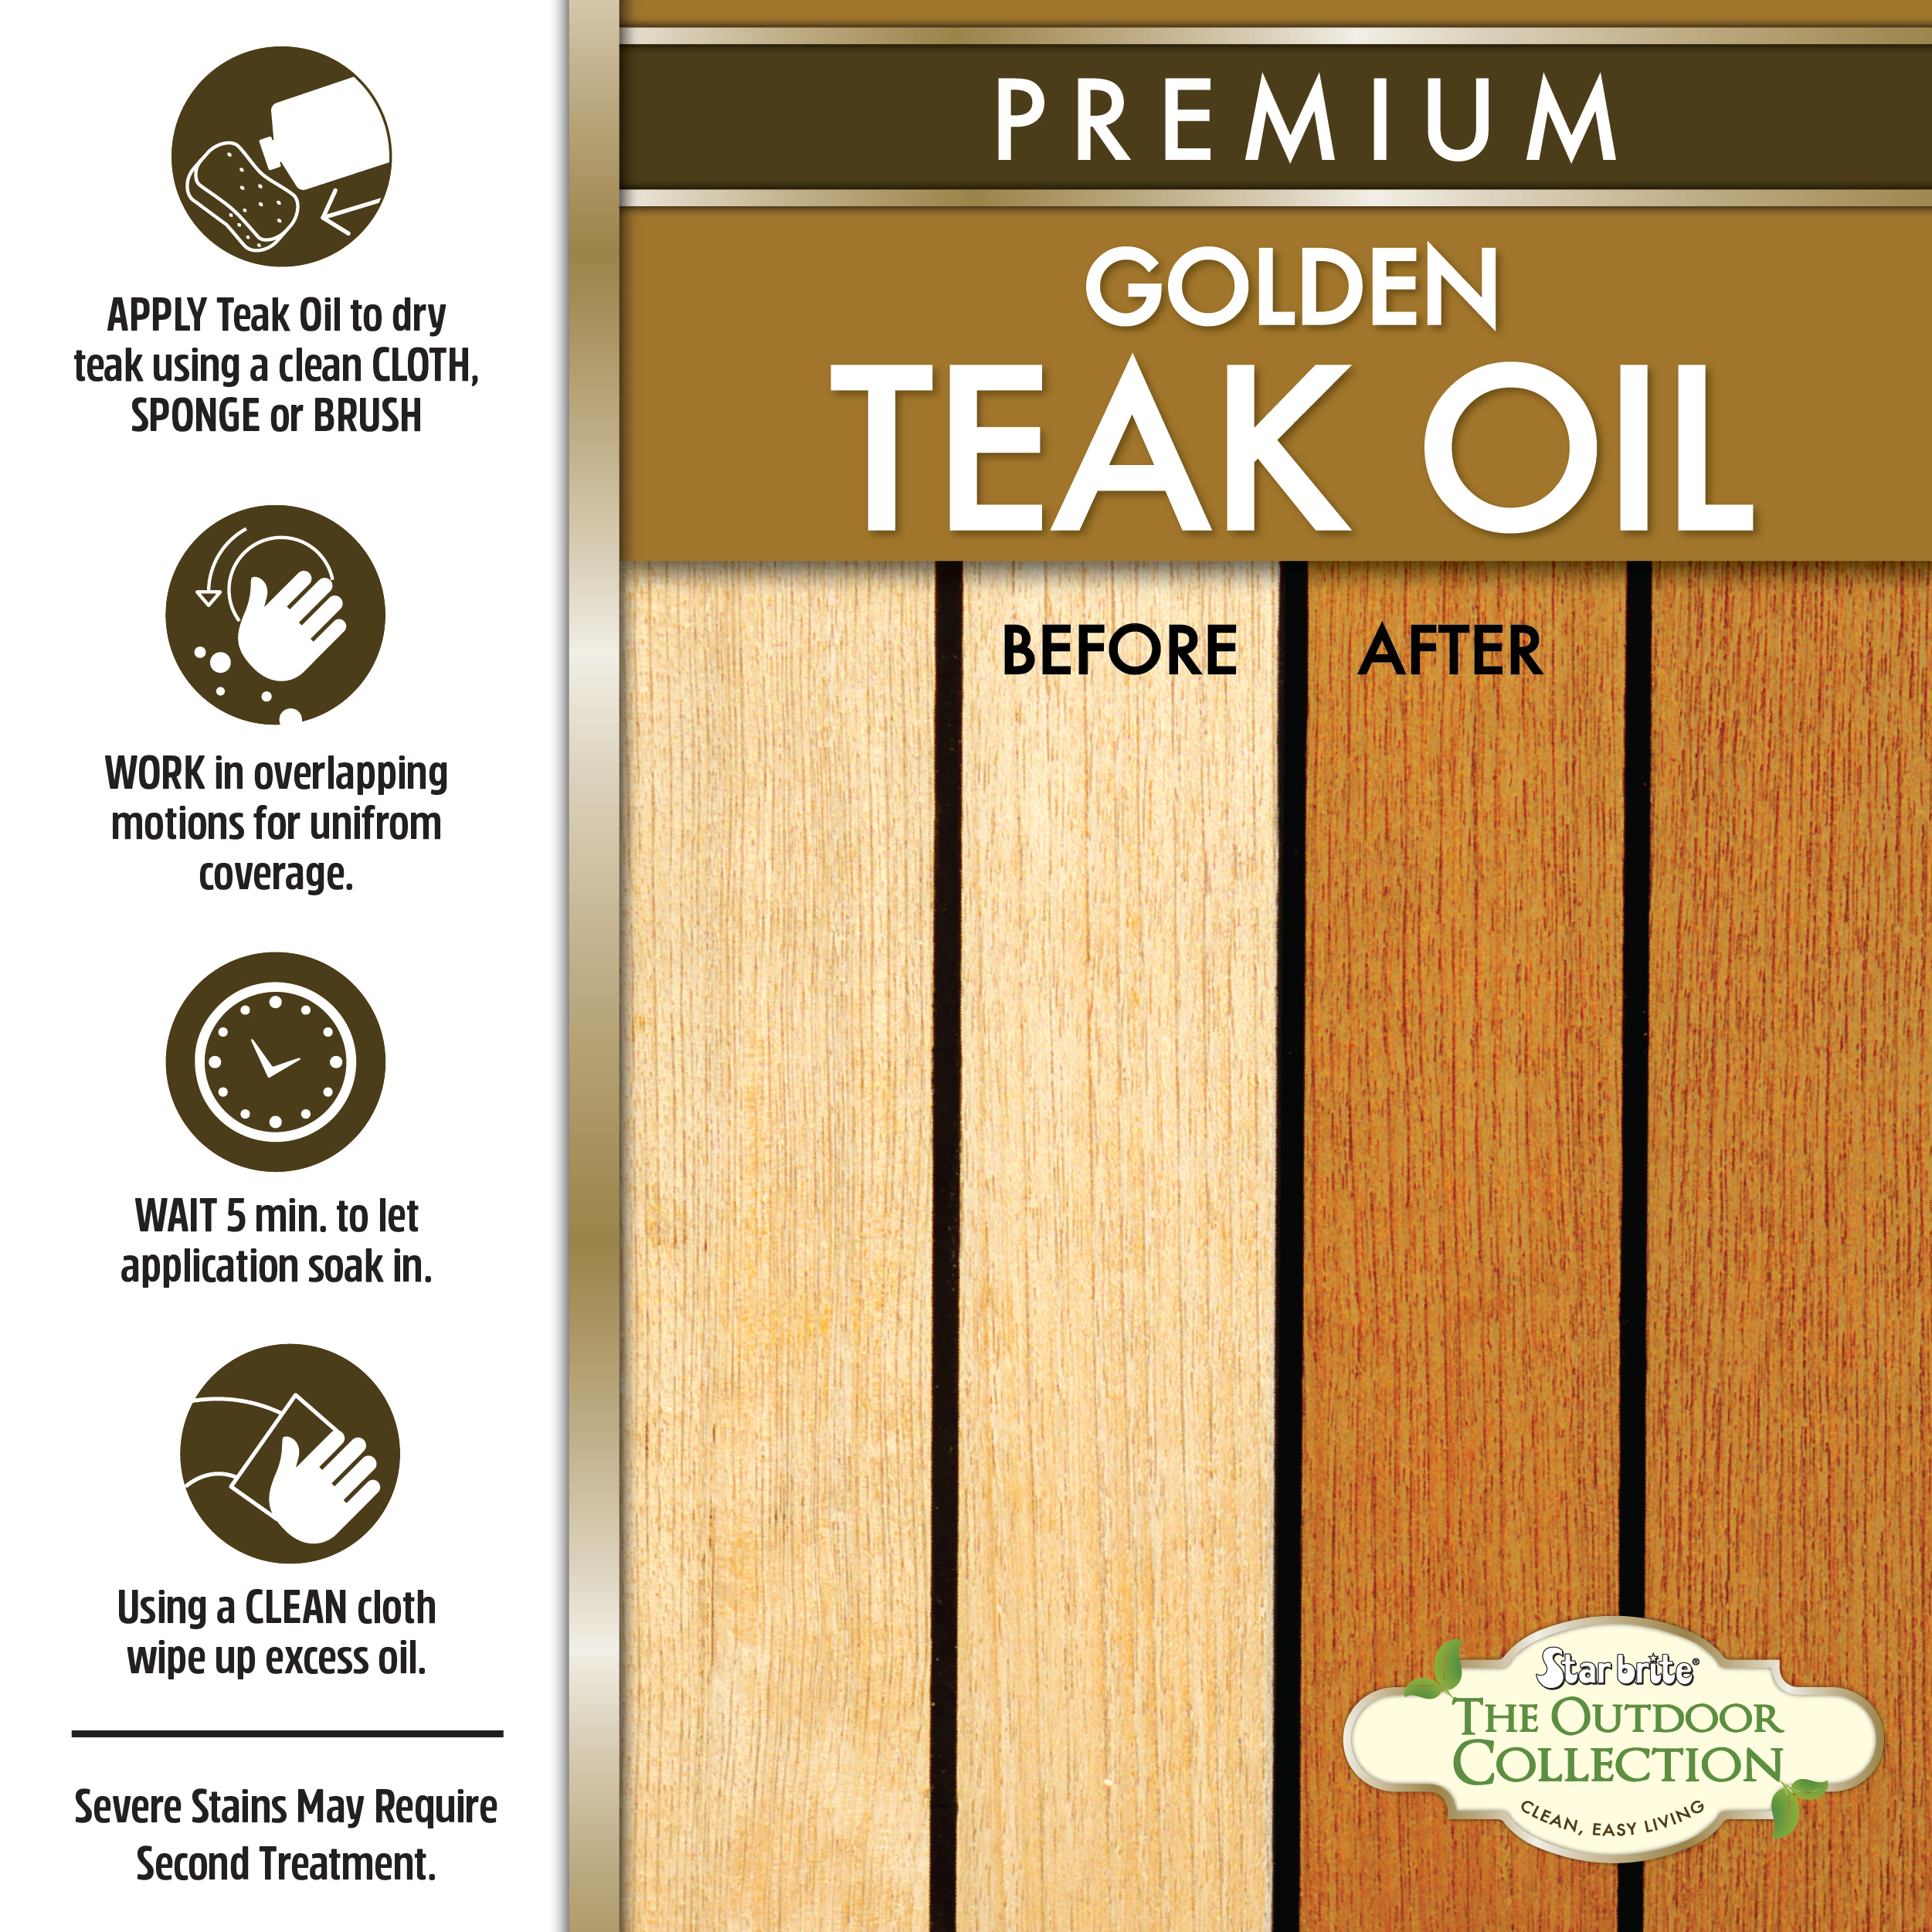 How to apply Teak Oil - teak wood oil